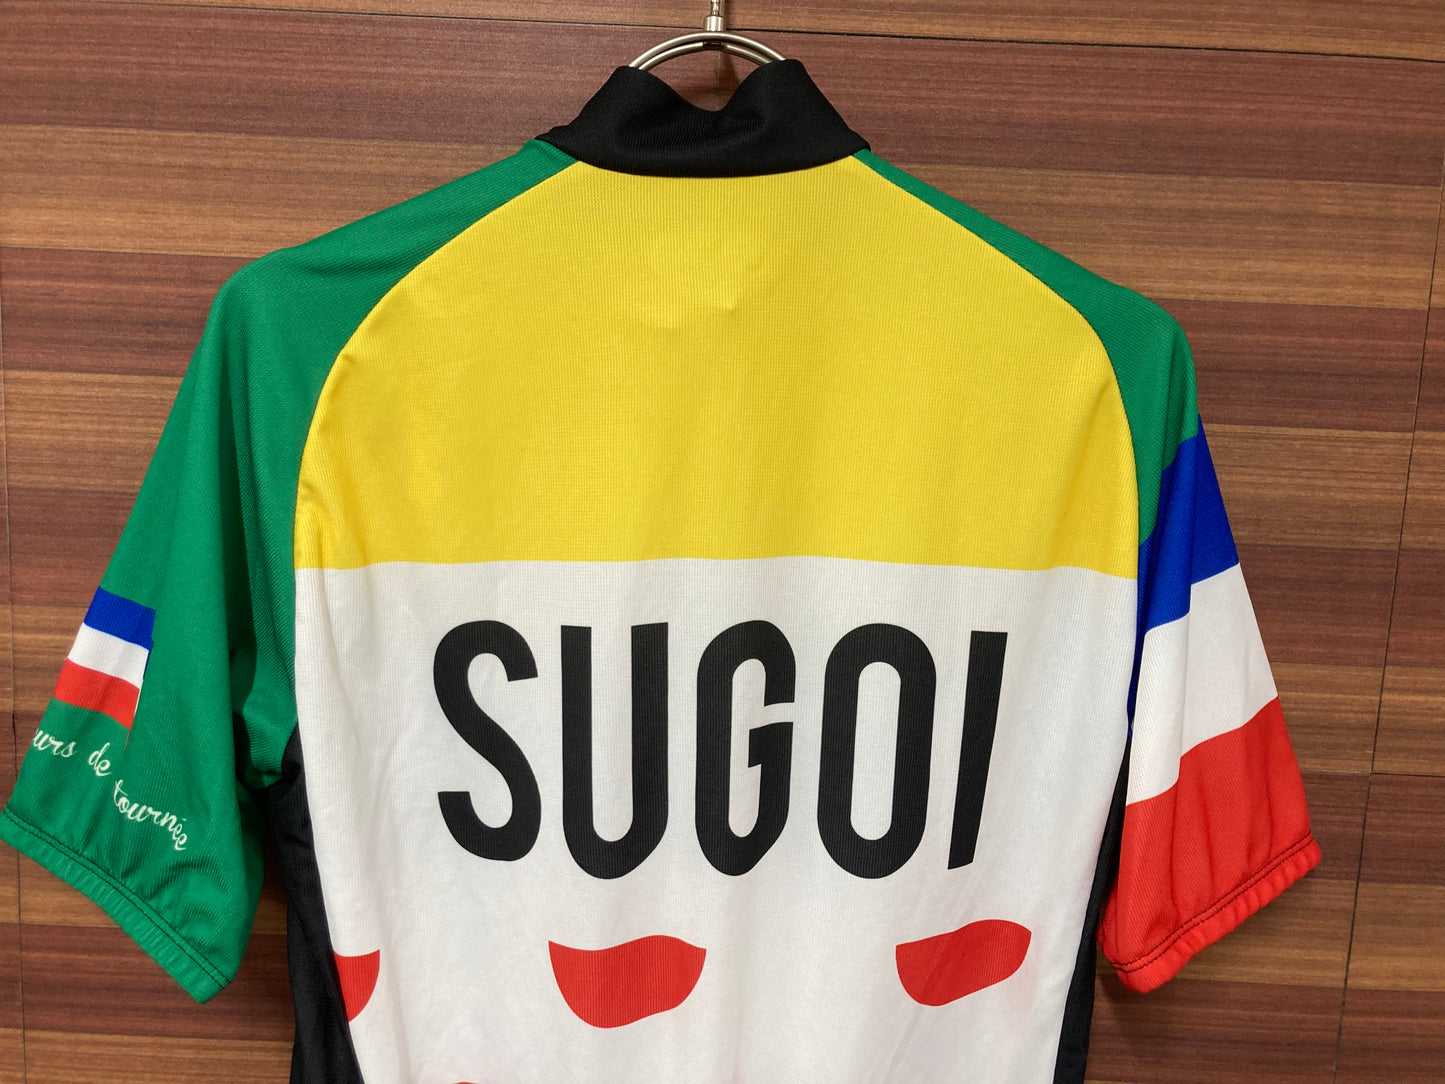 GI198 スゴイ sugoi La tournee jersey 半袖サイクルジャージ M 白緑赤